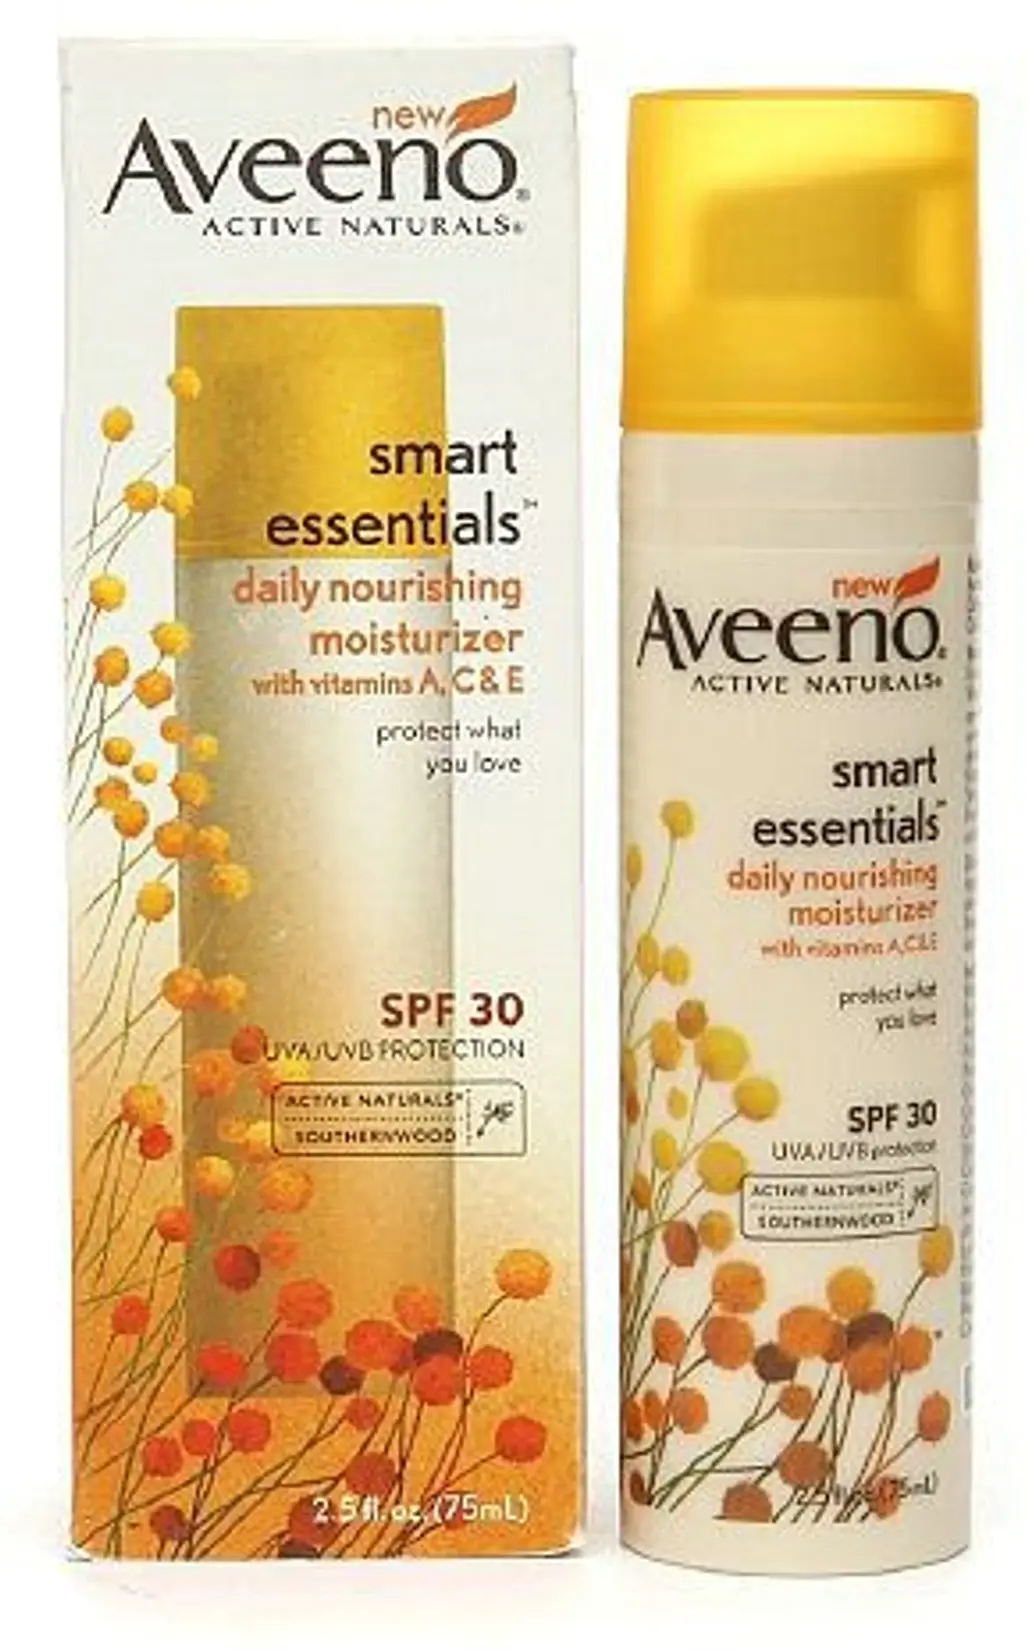 Aveeno Active Naturals Smart Essentials Daily Nourishing Moisturizer SPF 30